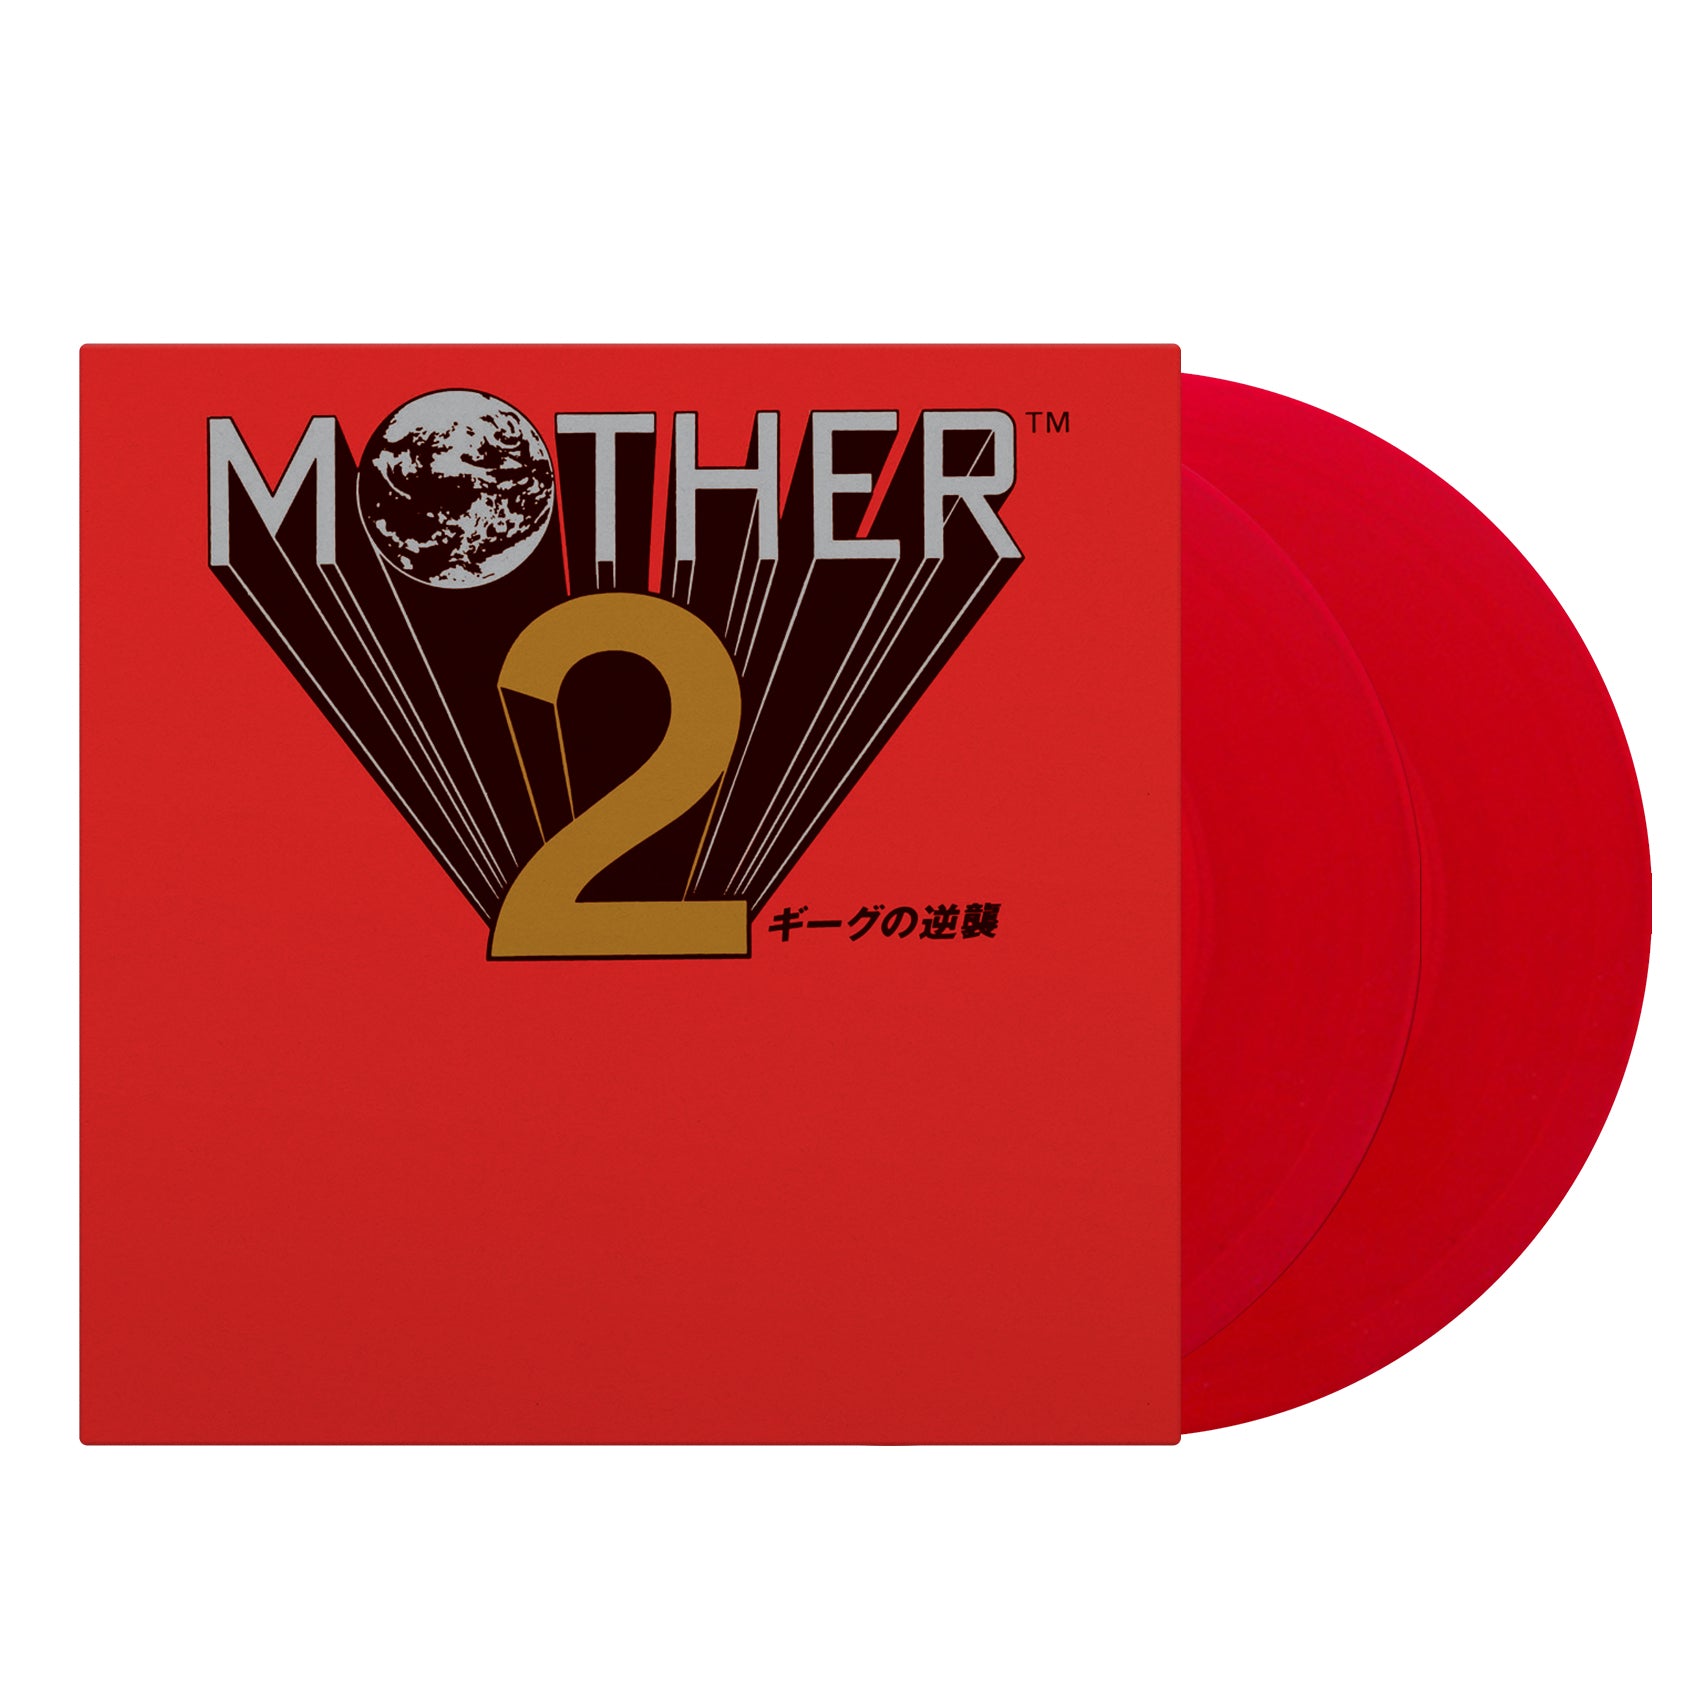 MOTHER 2 (Original Video Game Soundtrack)